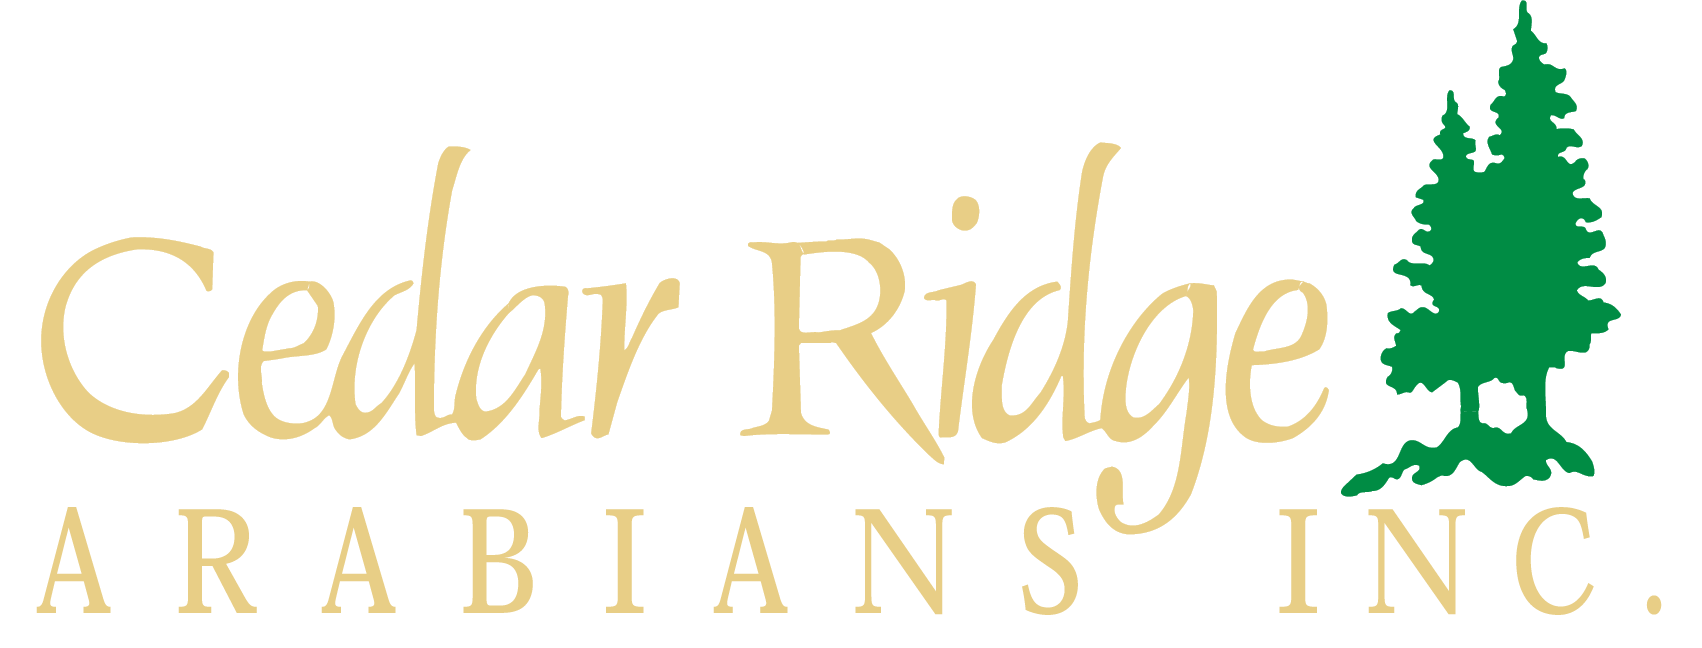 Cedar Ridge Arab goldgrn